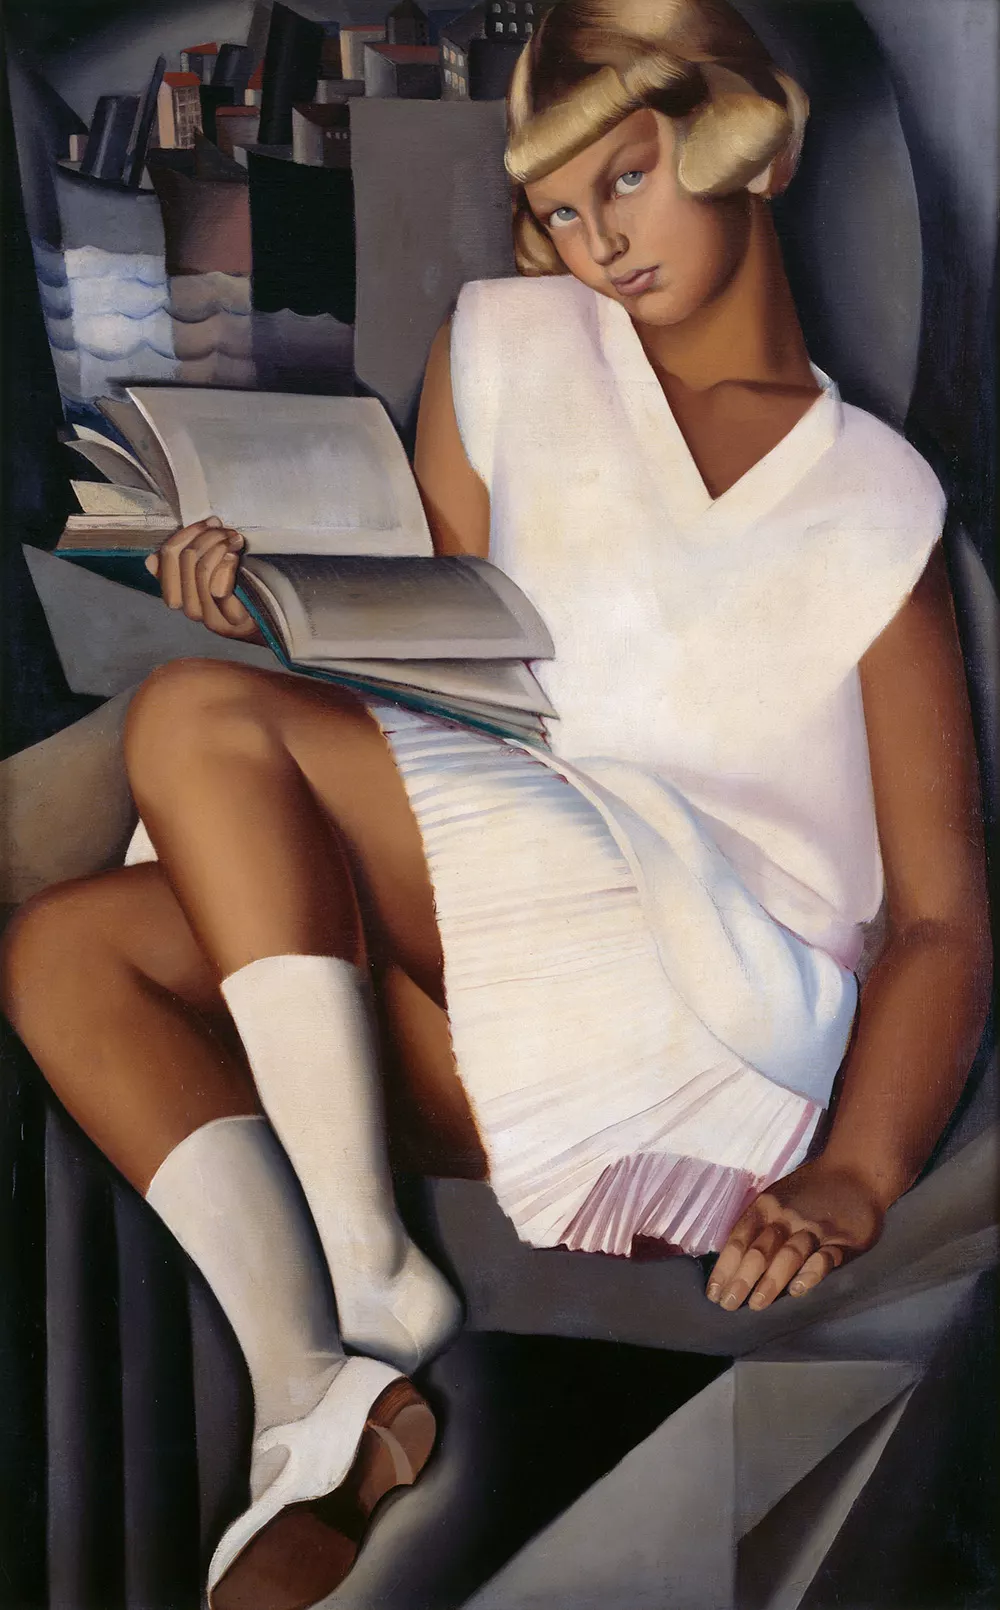 painting of Tamara Lempicka